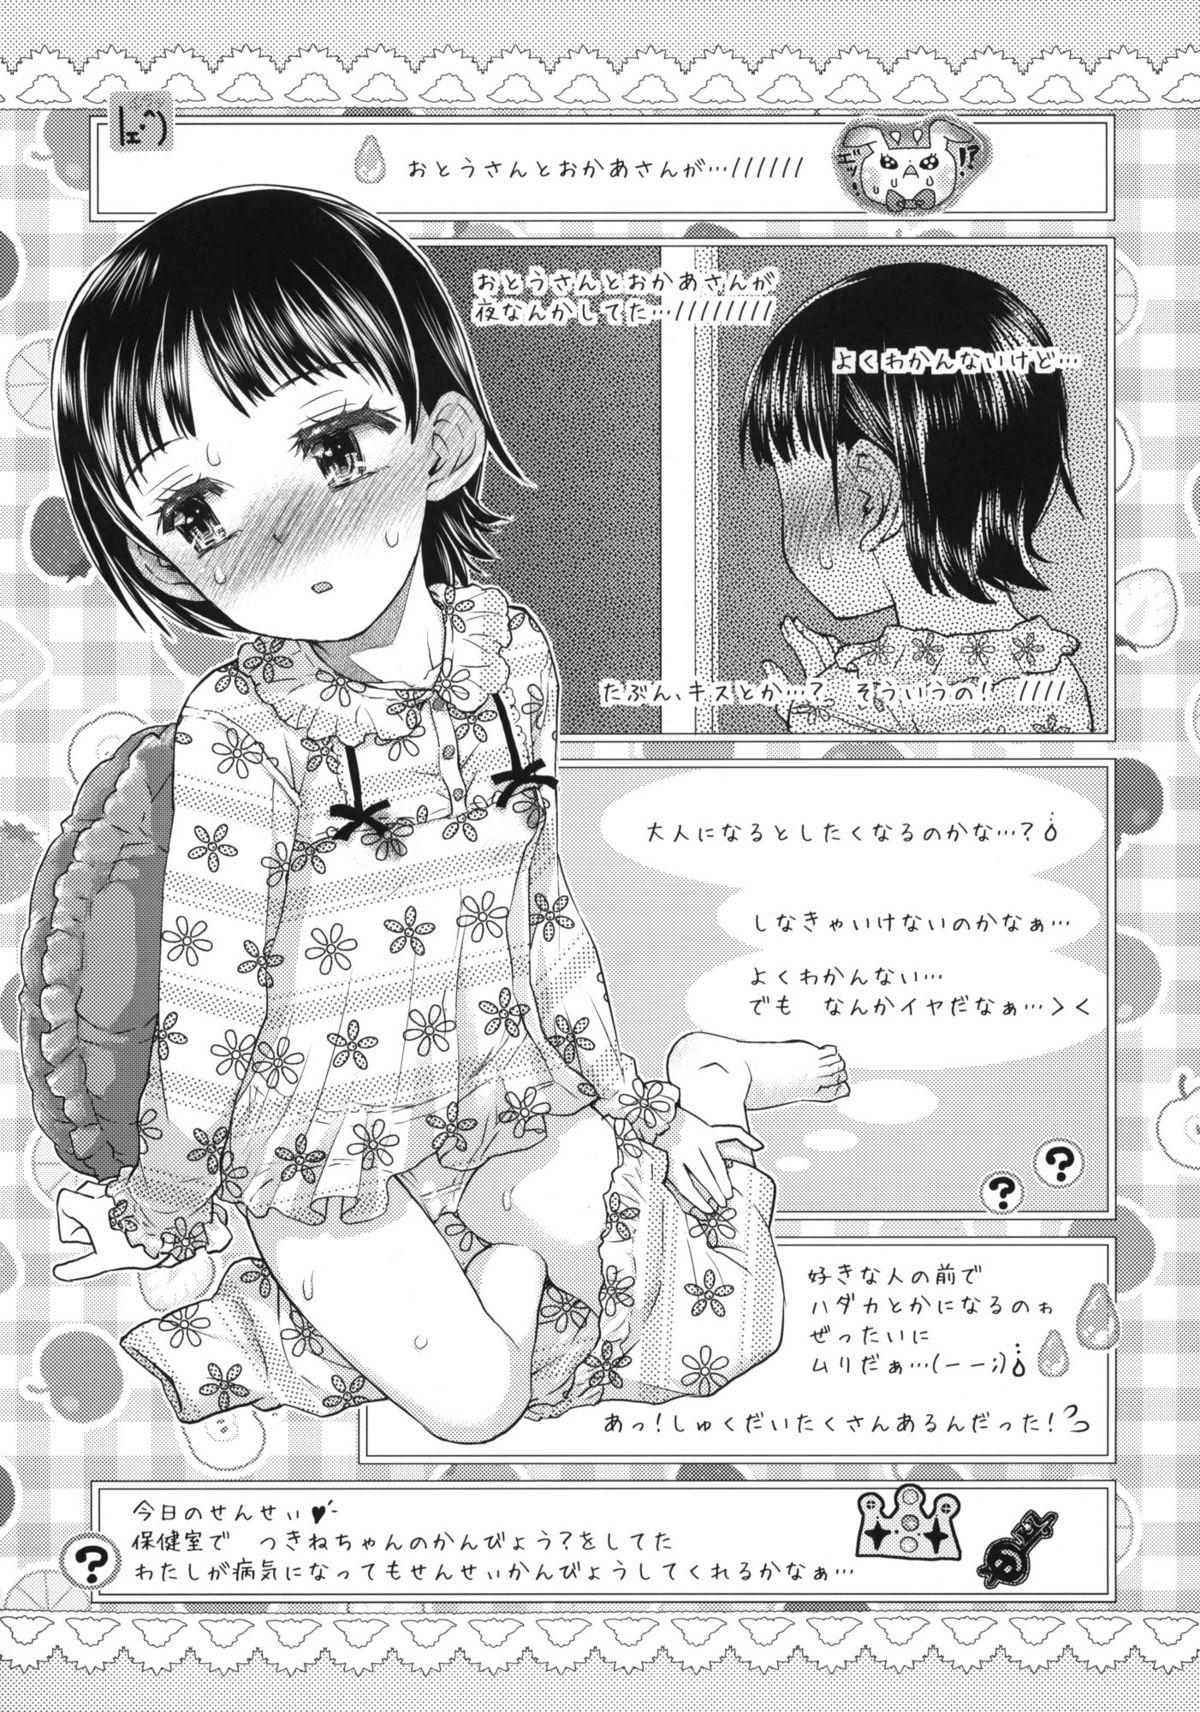 Verification Doushite Oppai ga Itaku Naru no? + Paper Pussy Eating - Page 8